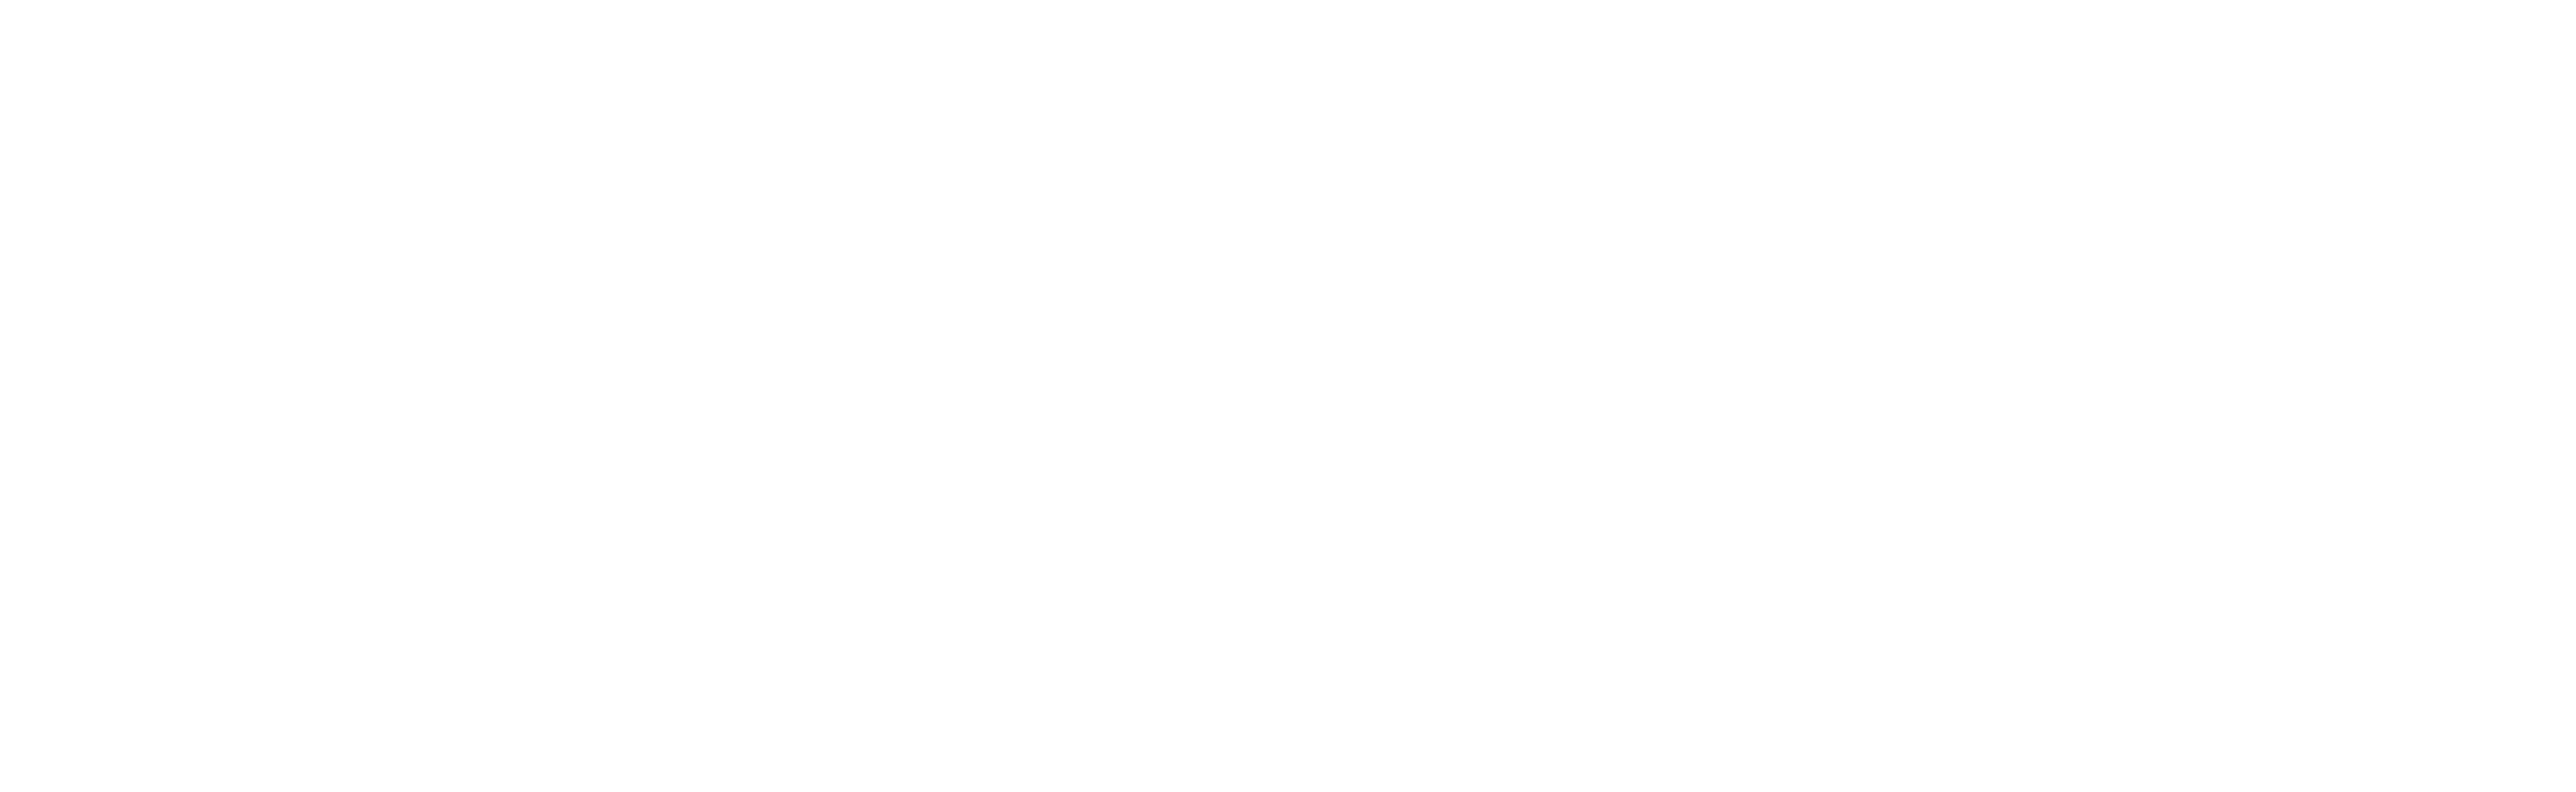 Elevate Dental Partners